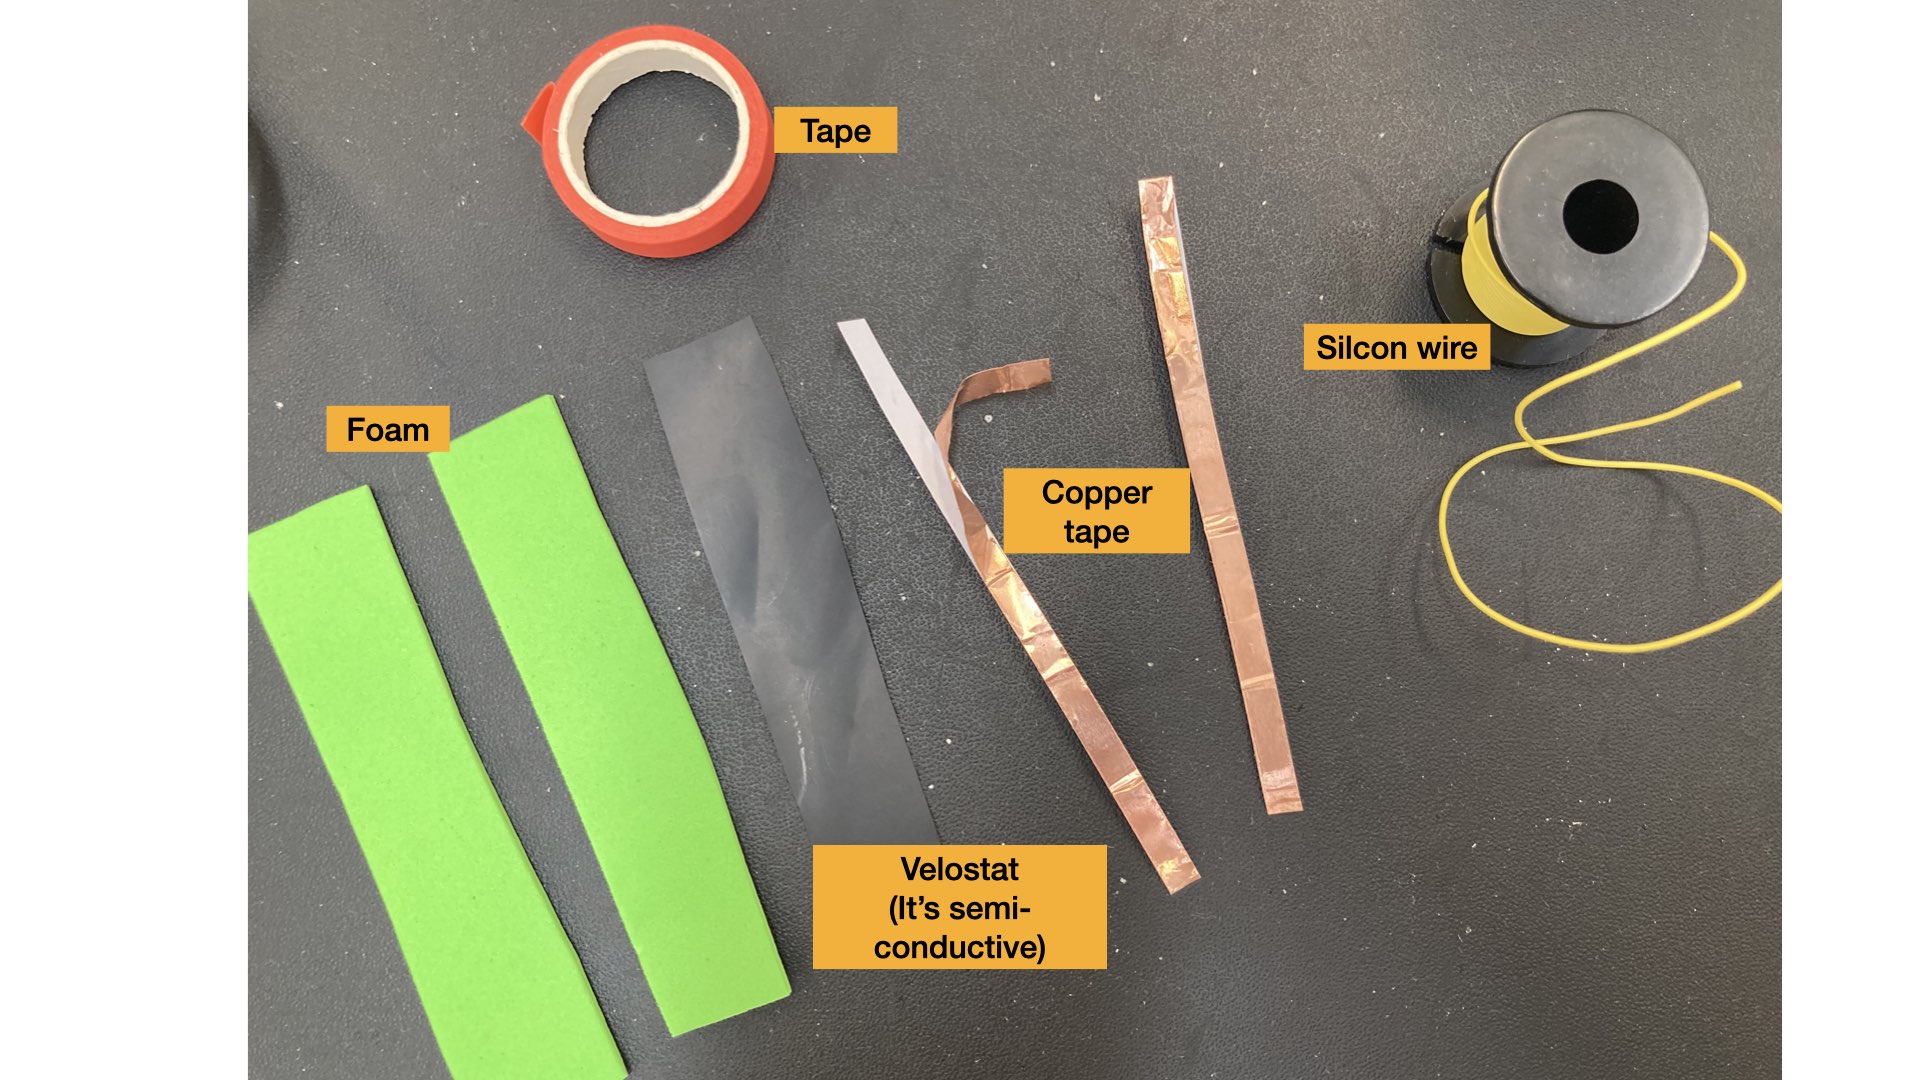 Image of Tape, Foam, Copper tape, Silicon Wire and velostat